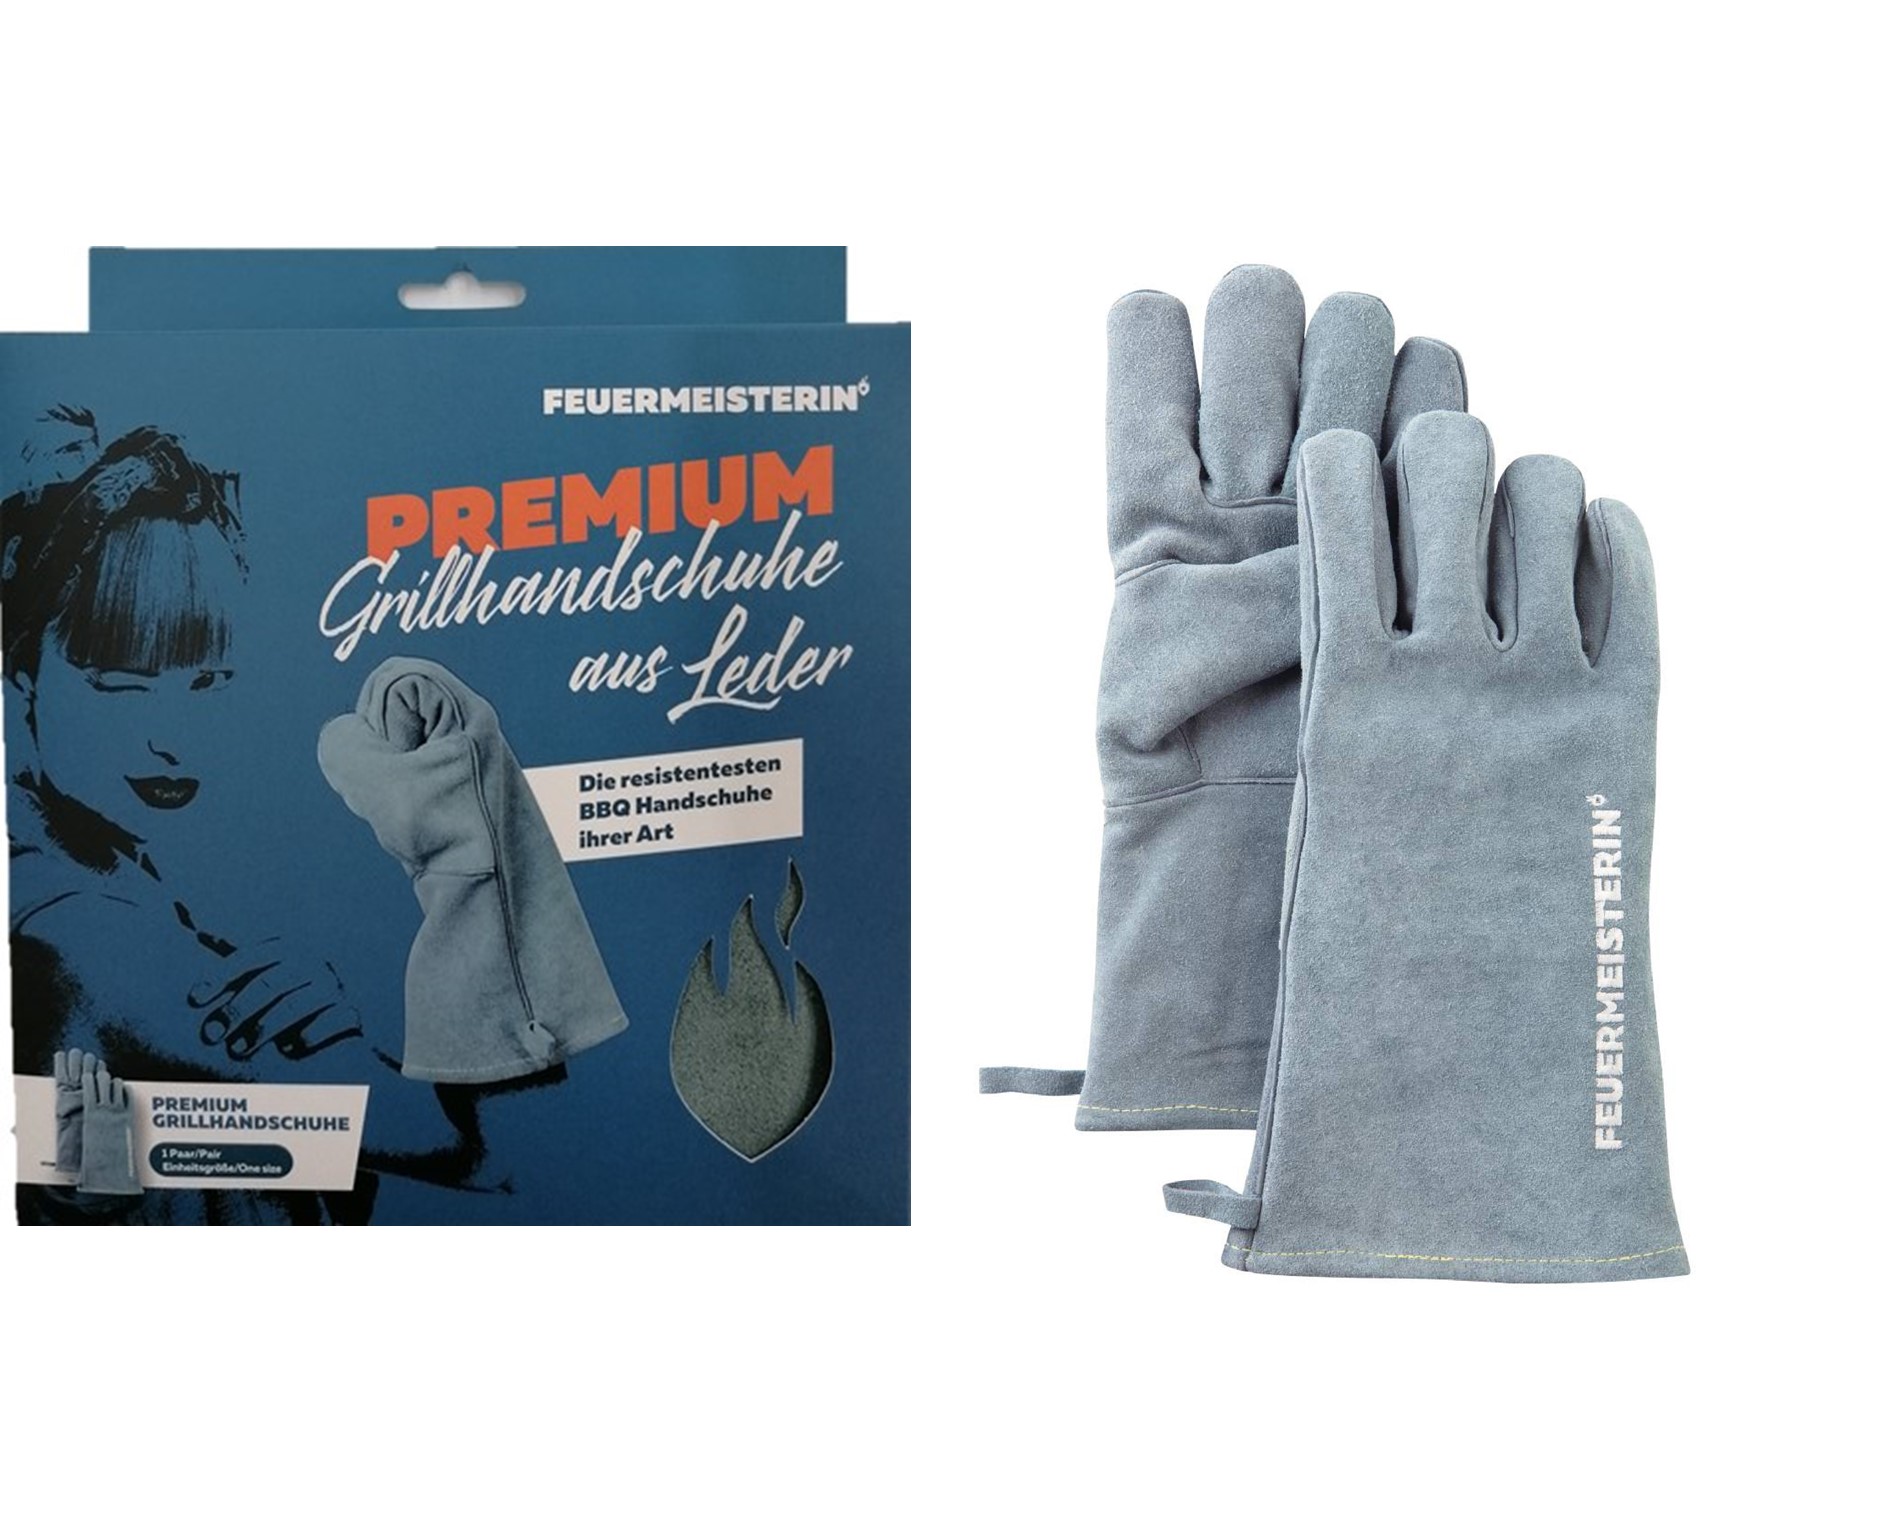 Feuermeisterin® Premium Grillhandschuhe, Leder, grau-blau